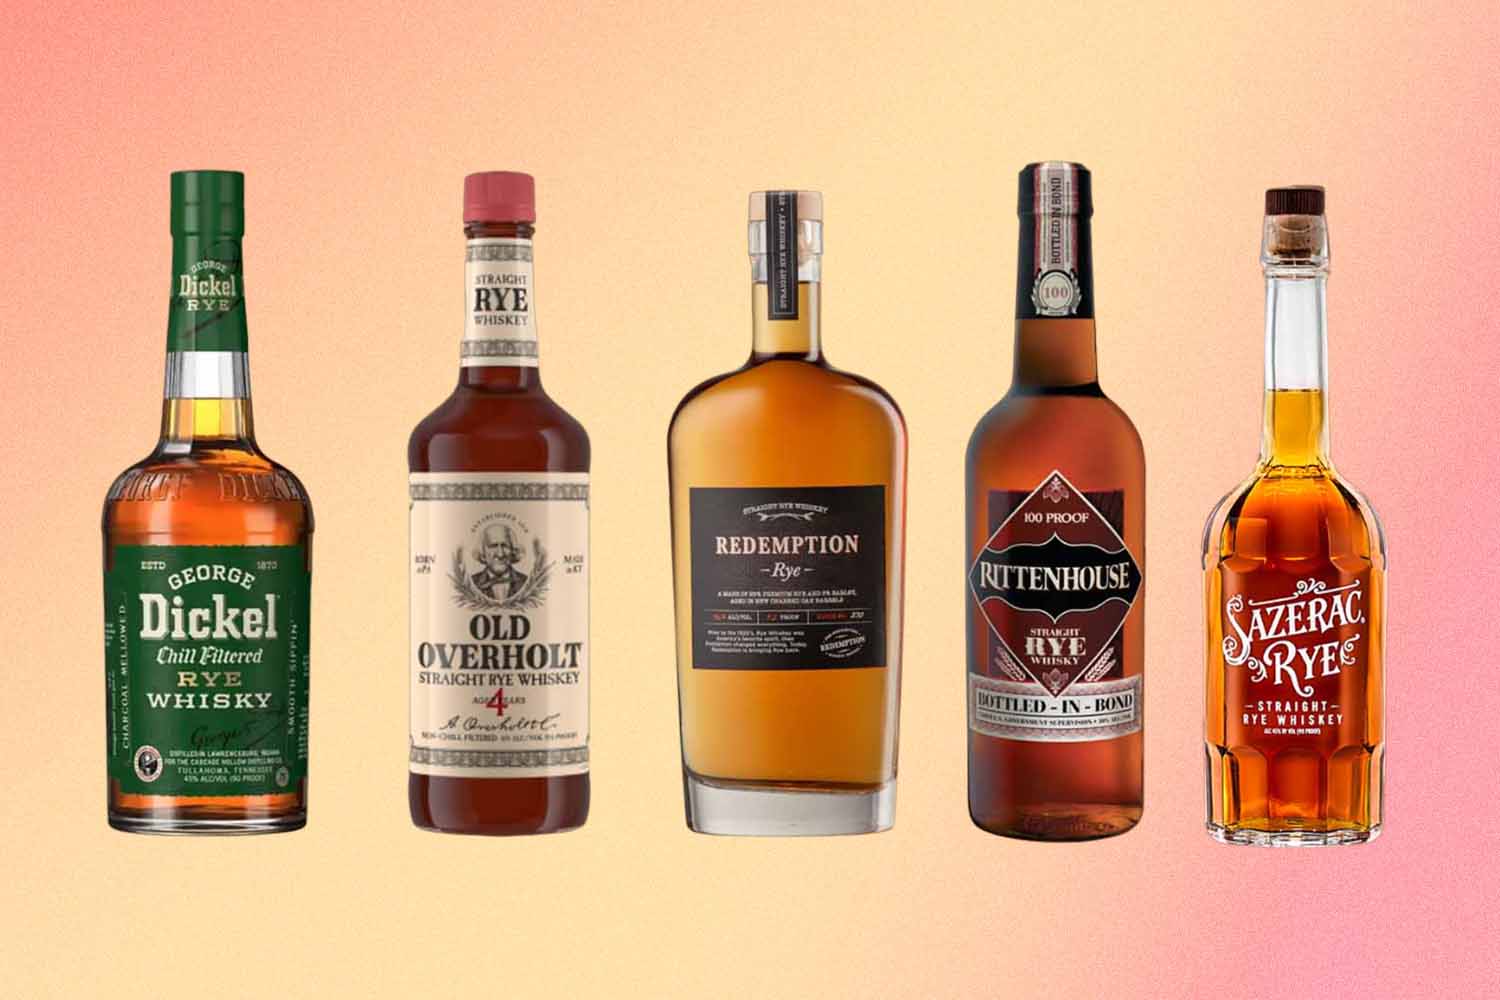 10 Best Rye Whiskey Brands to Drink 2022 - Top Rye Bottles to Buy